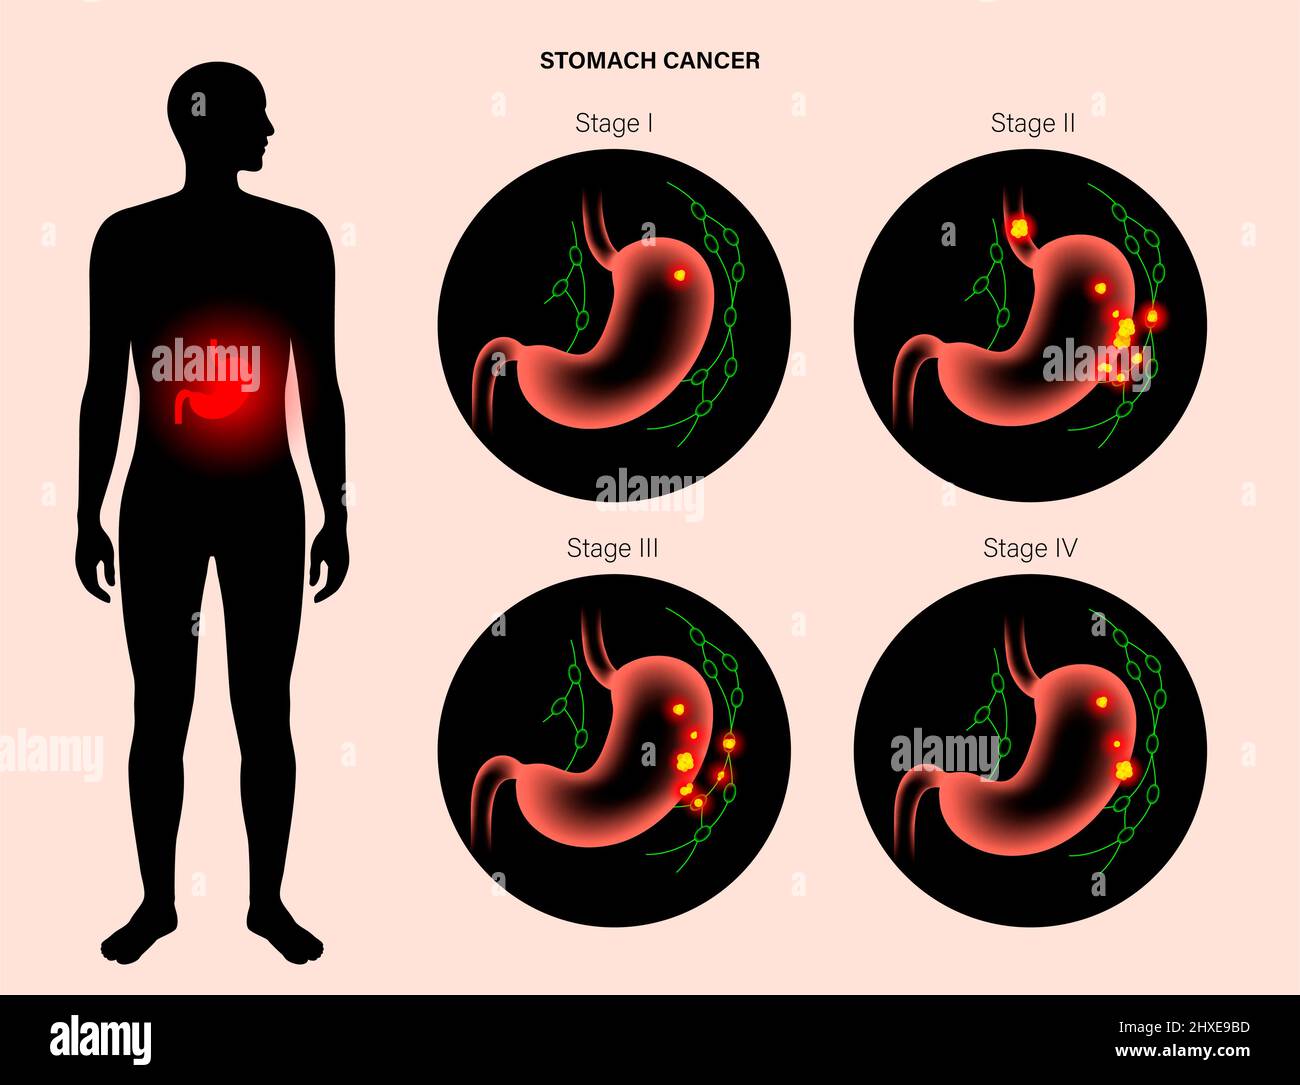 Stomach cancer, illustration Stock Photo